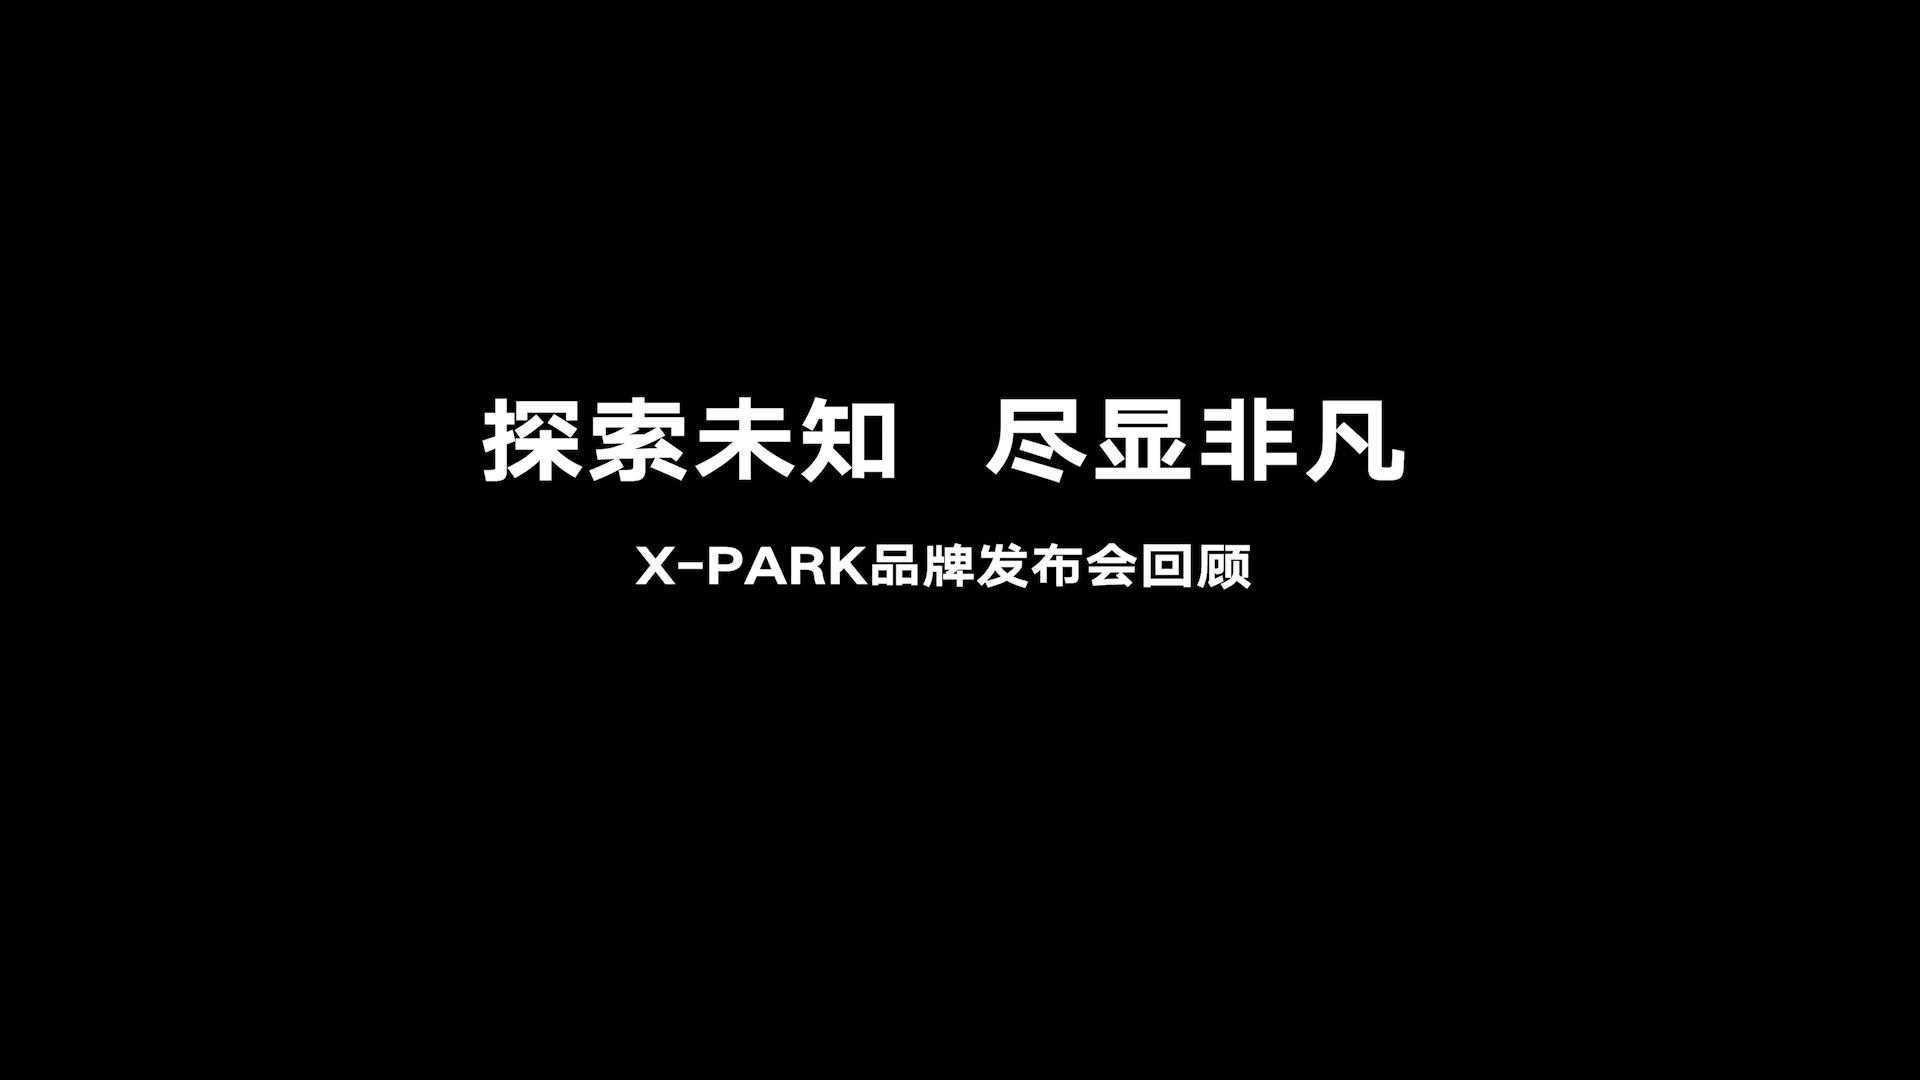 X-PARK发布会回顾